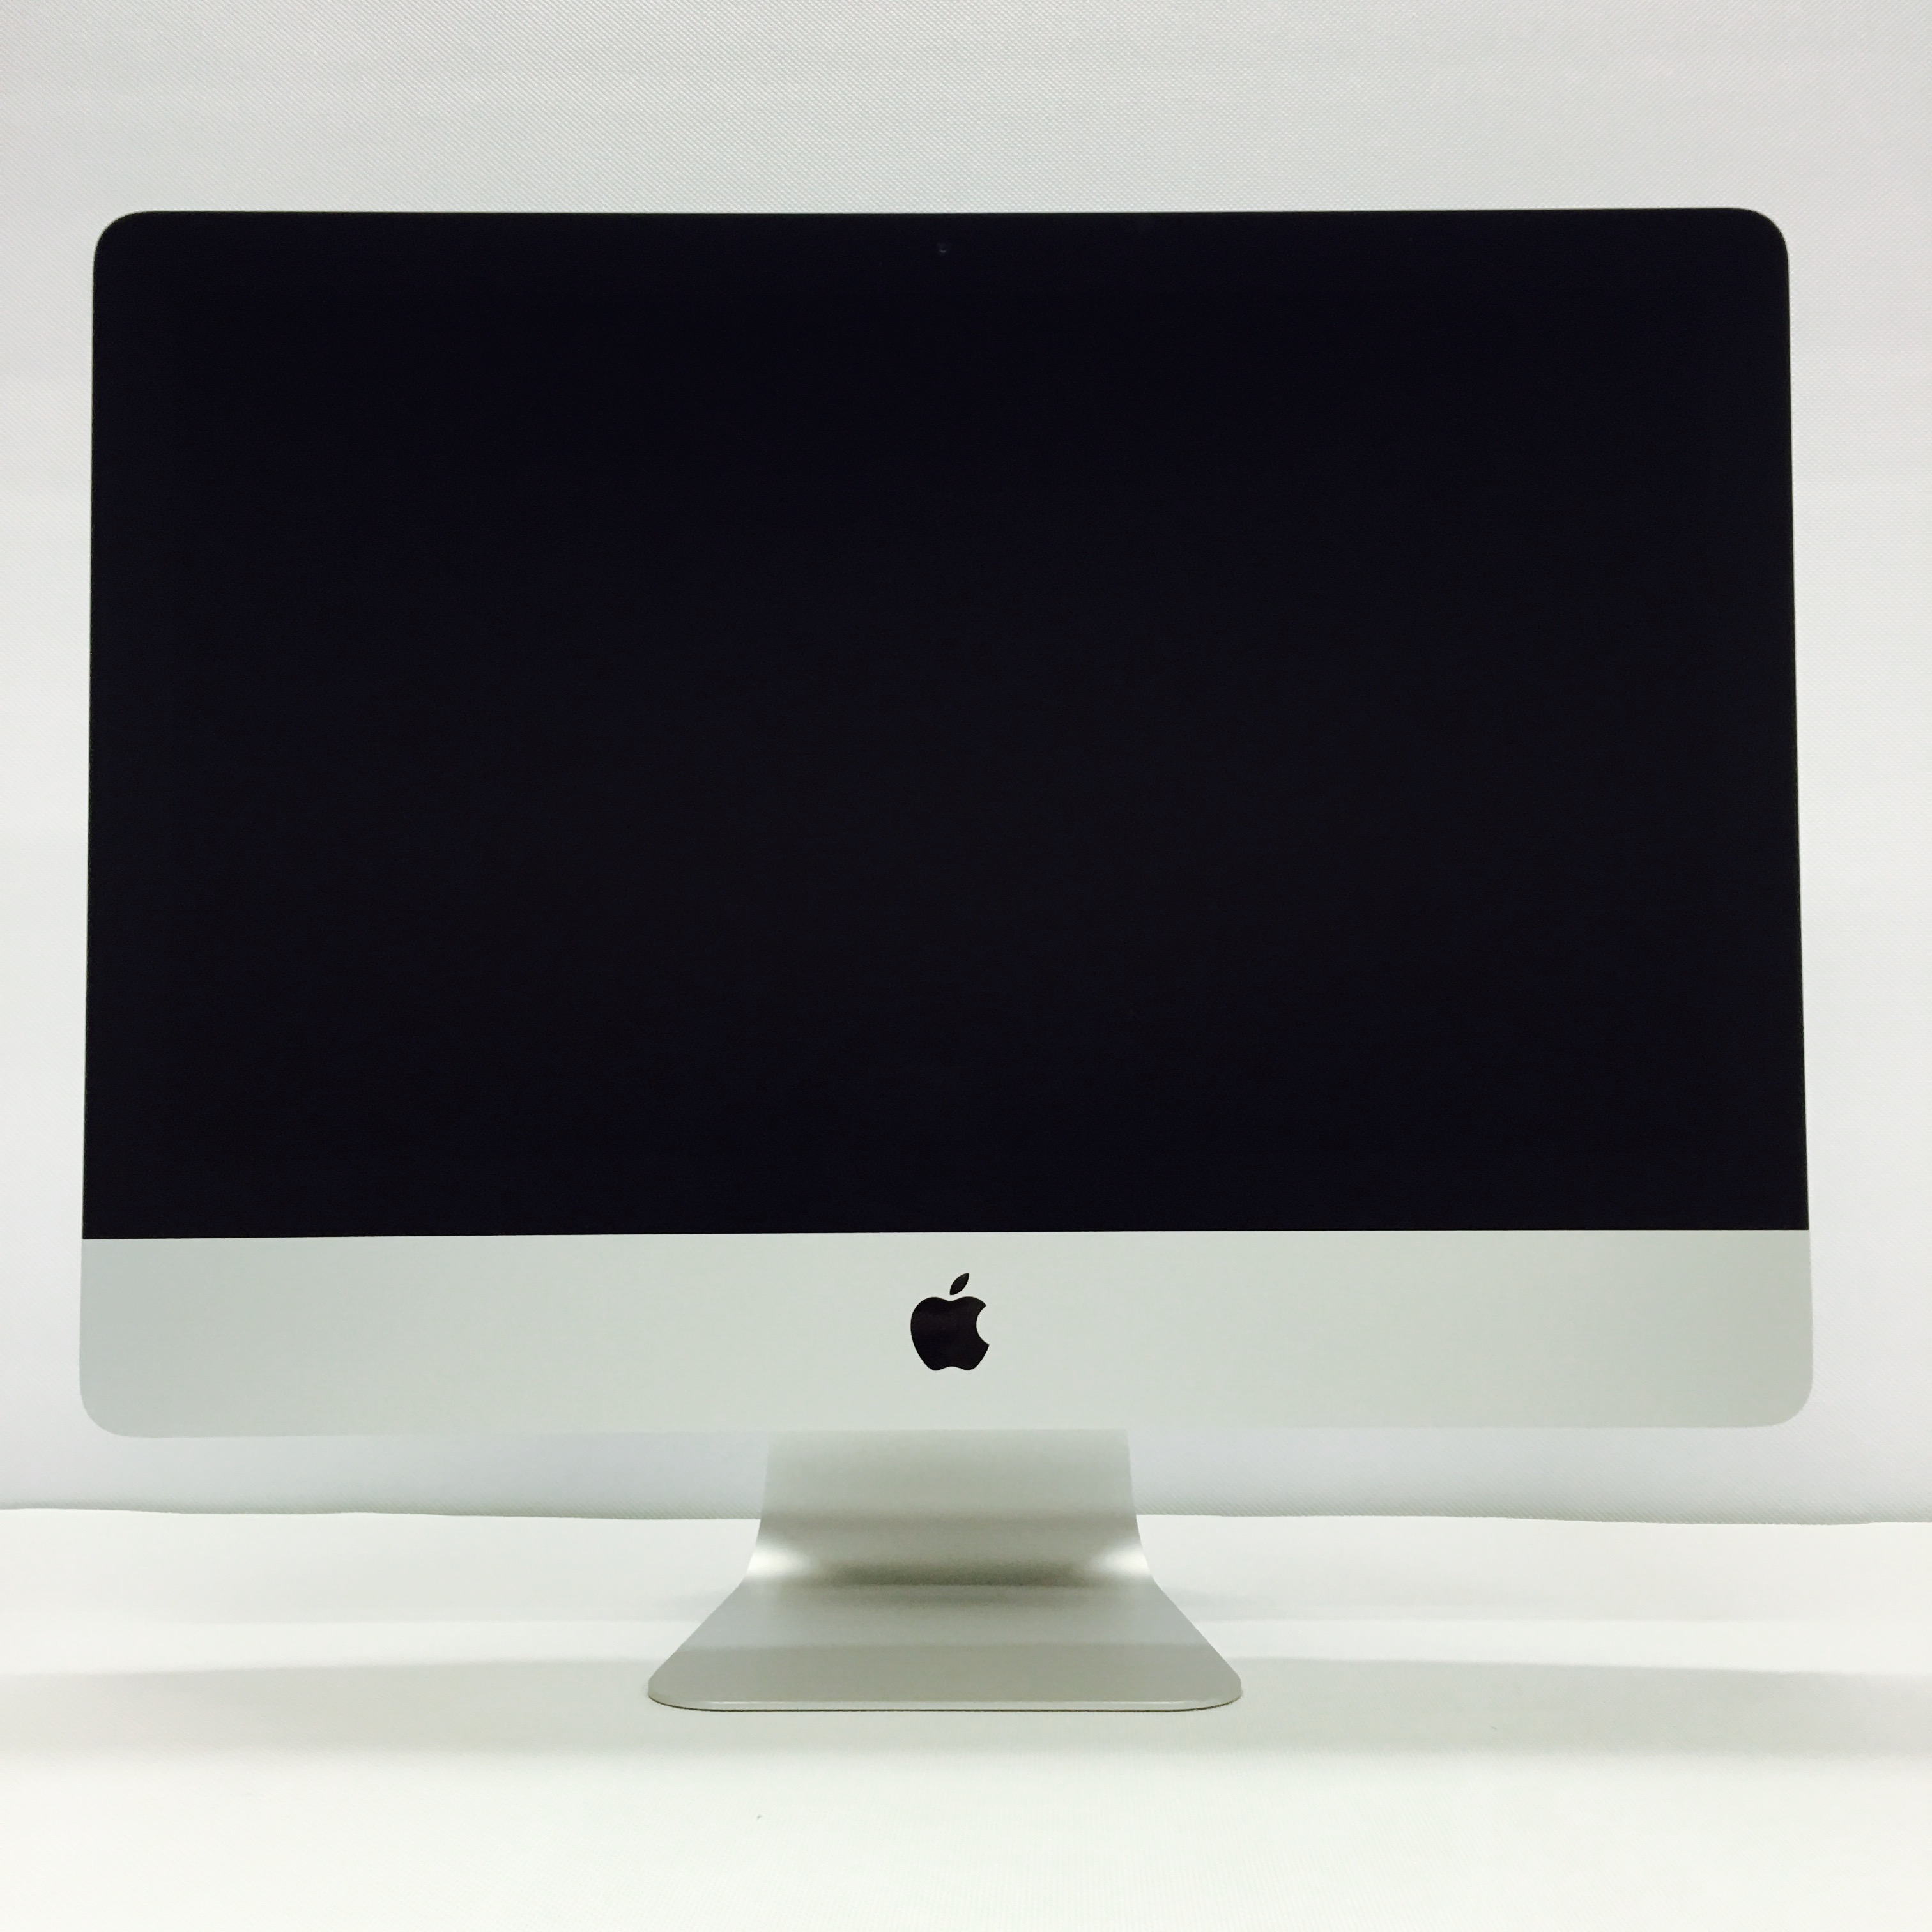 iMac 21.5" Retina 4K Late 2015 (Intel Quad-Core i5 3.1 GHz 8 GB RAM 512 GB SSD), Intel Quad-Core i5 3.1 GHz, 8 GB RAM, 512 GB SSD, image 1